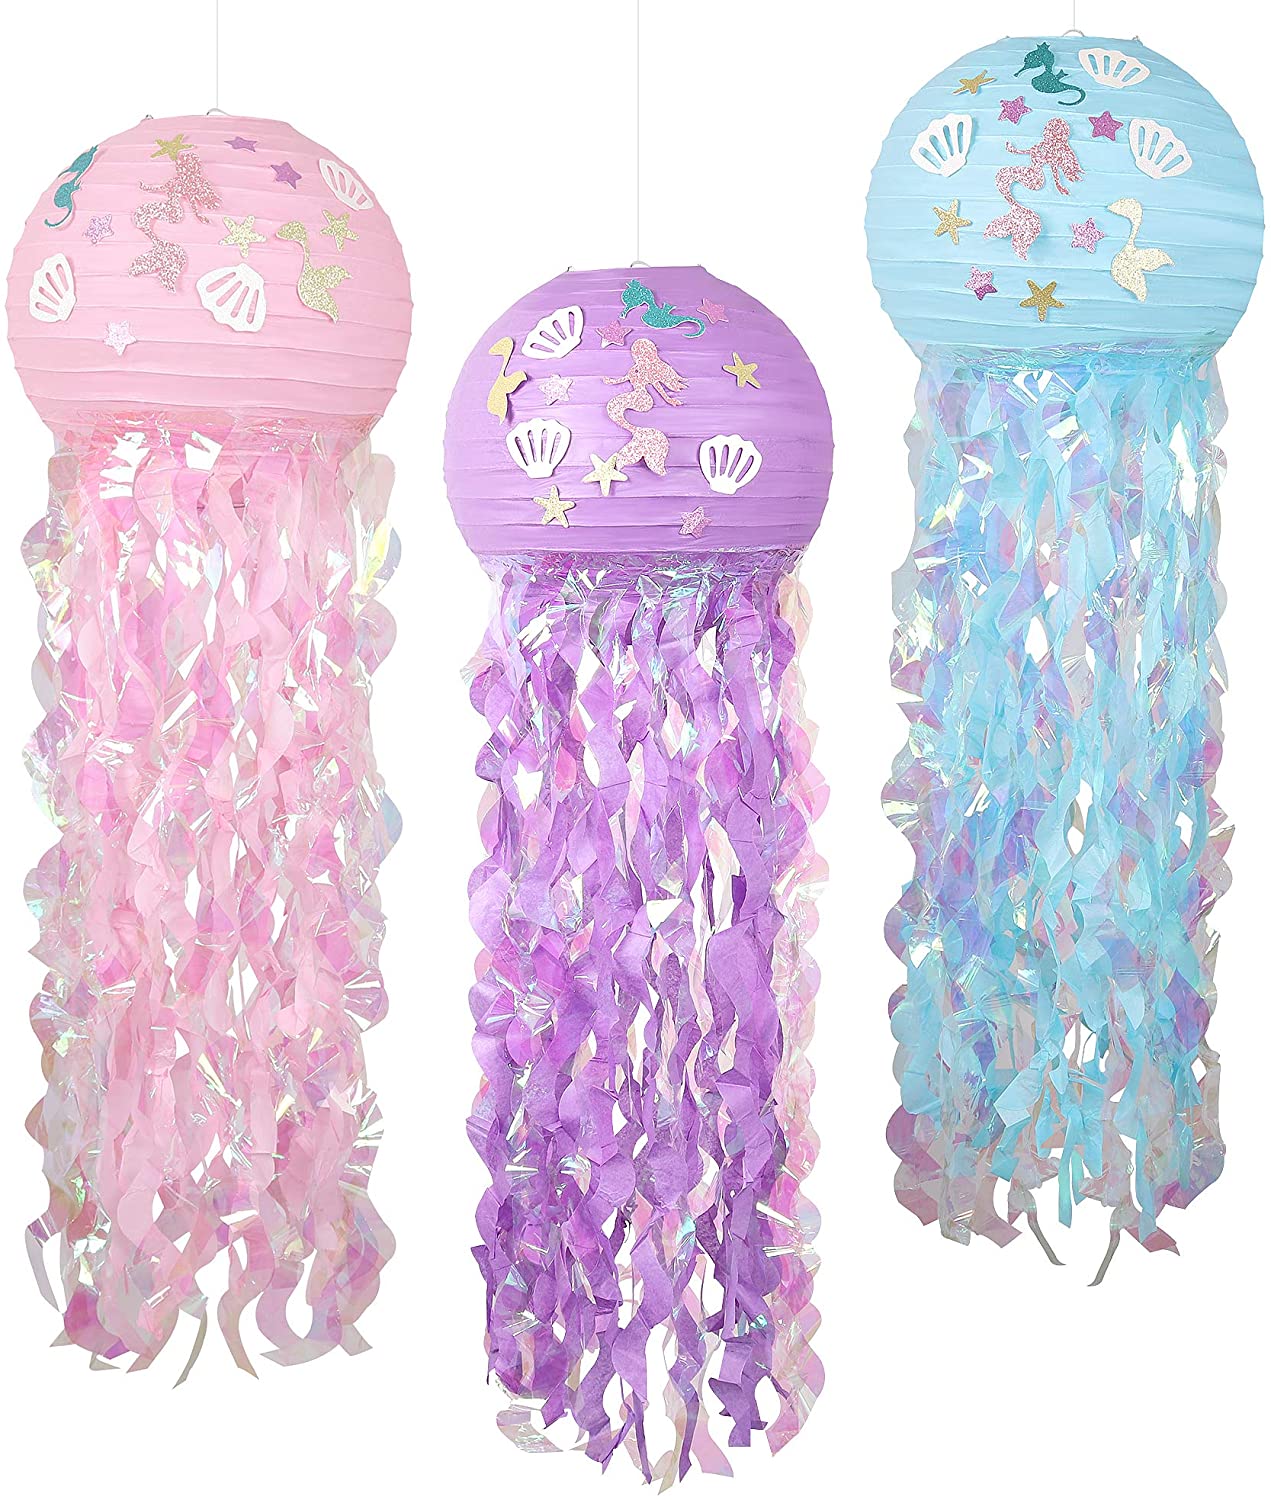 mermaid-birthday-party-ideas-lanterns